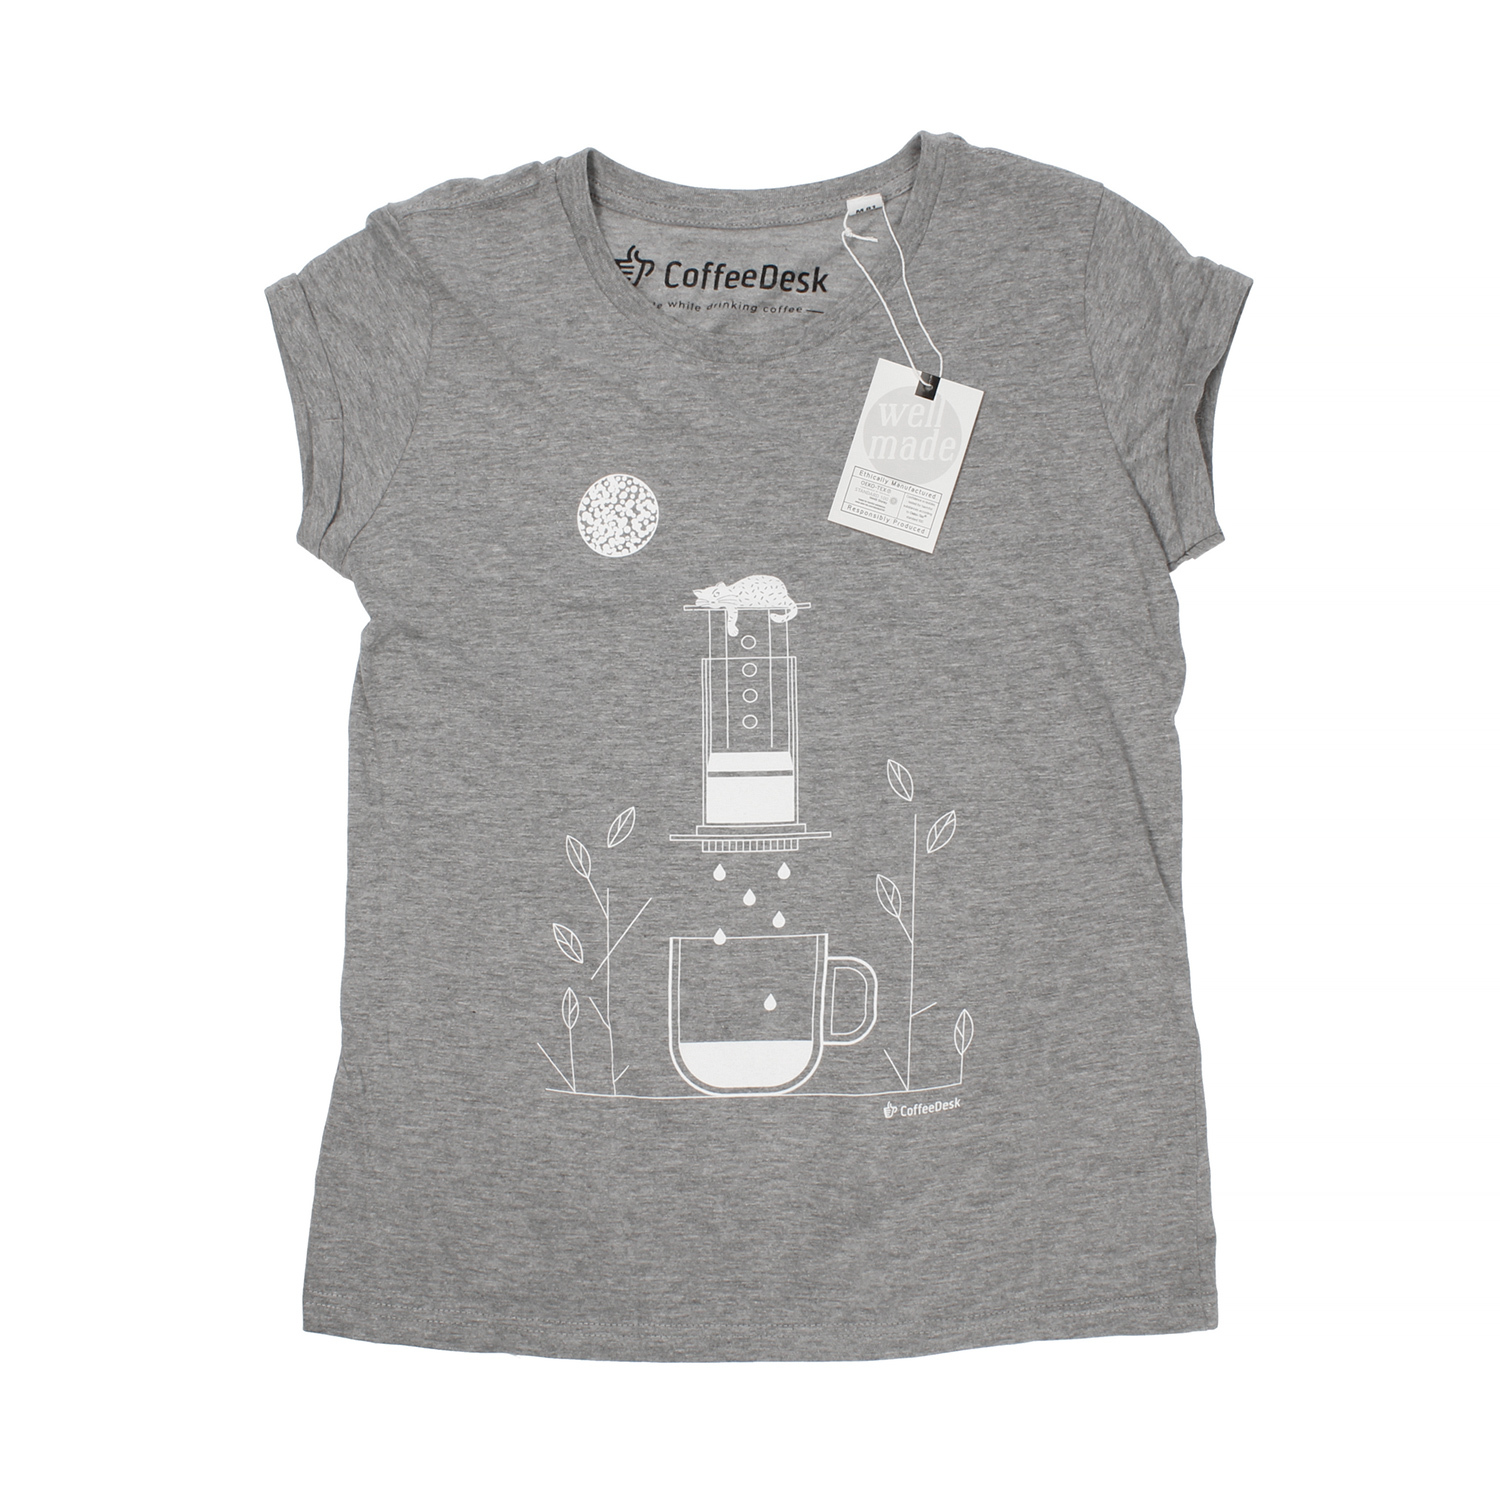 Coffeedesk AeroPress Women's Grey T-shirt - S